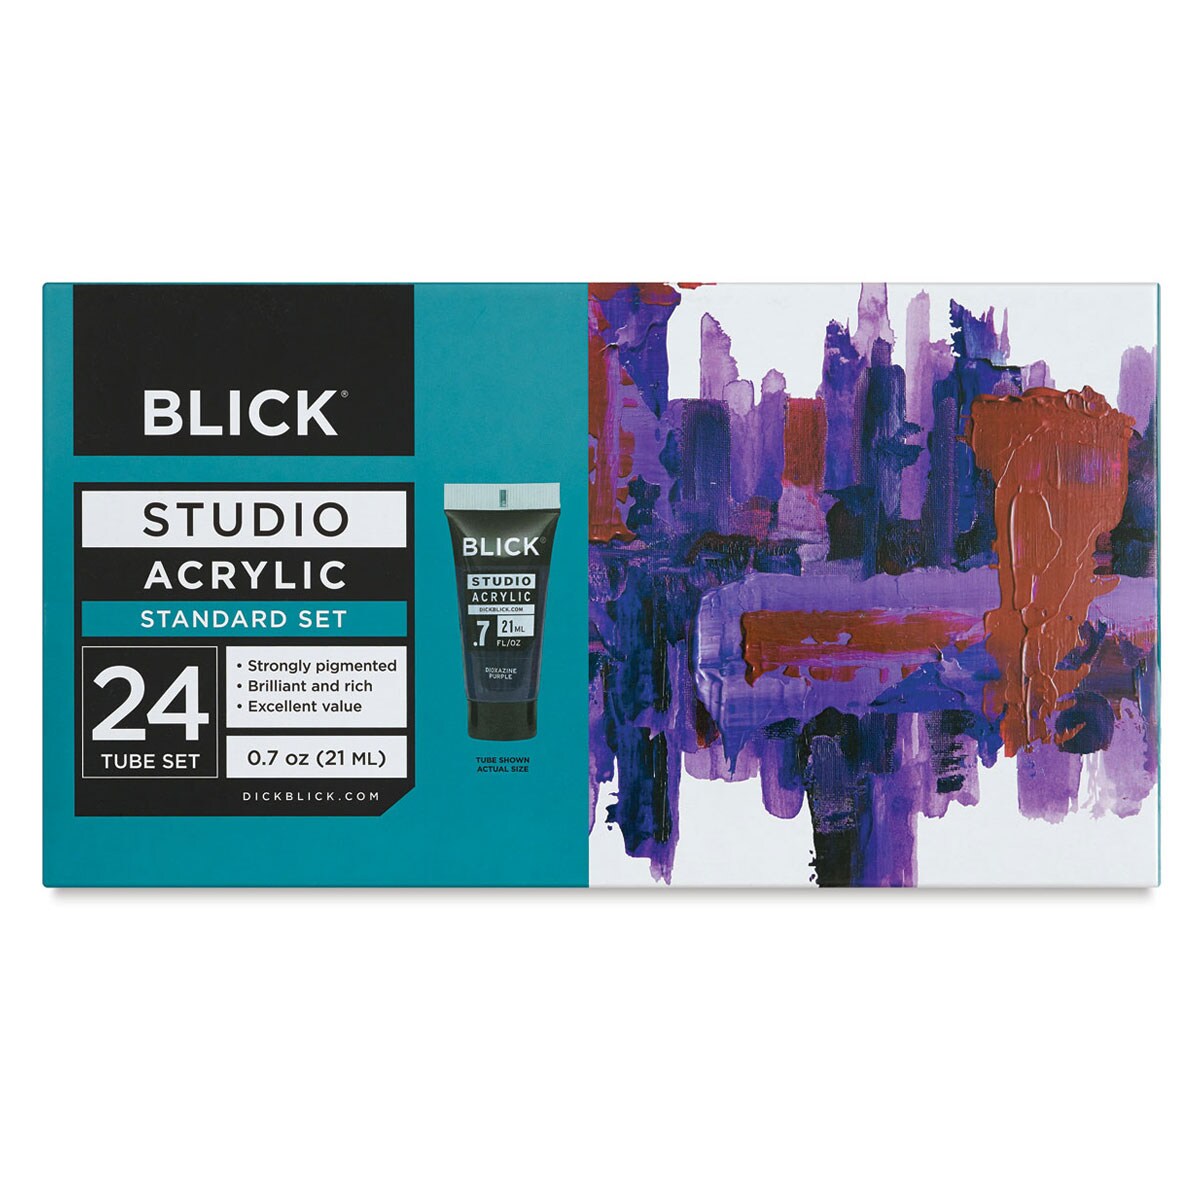 Blick Studio Acrylics Paint Set of 24 colors 21 ml tubes 